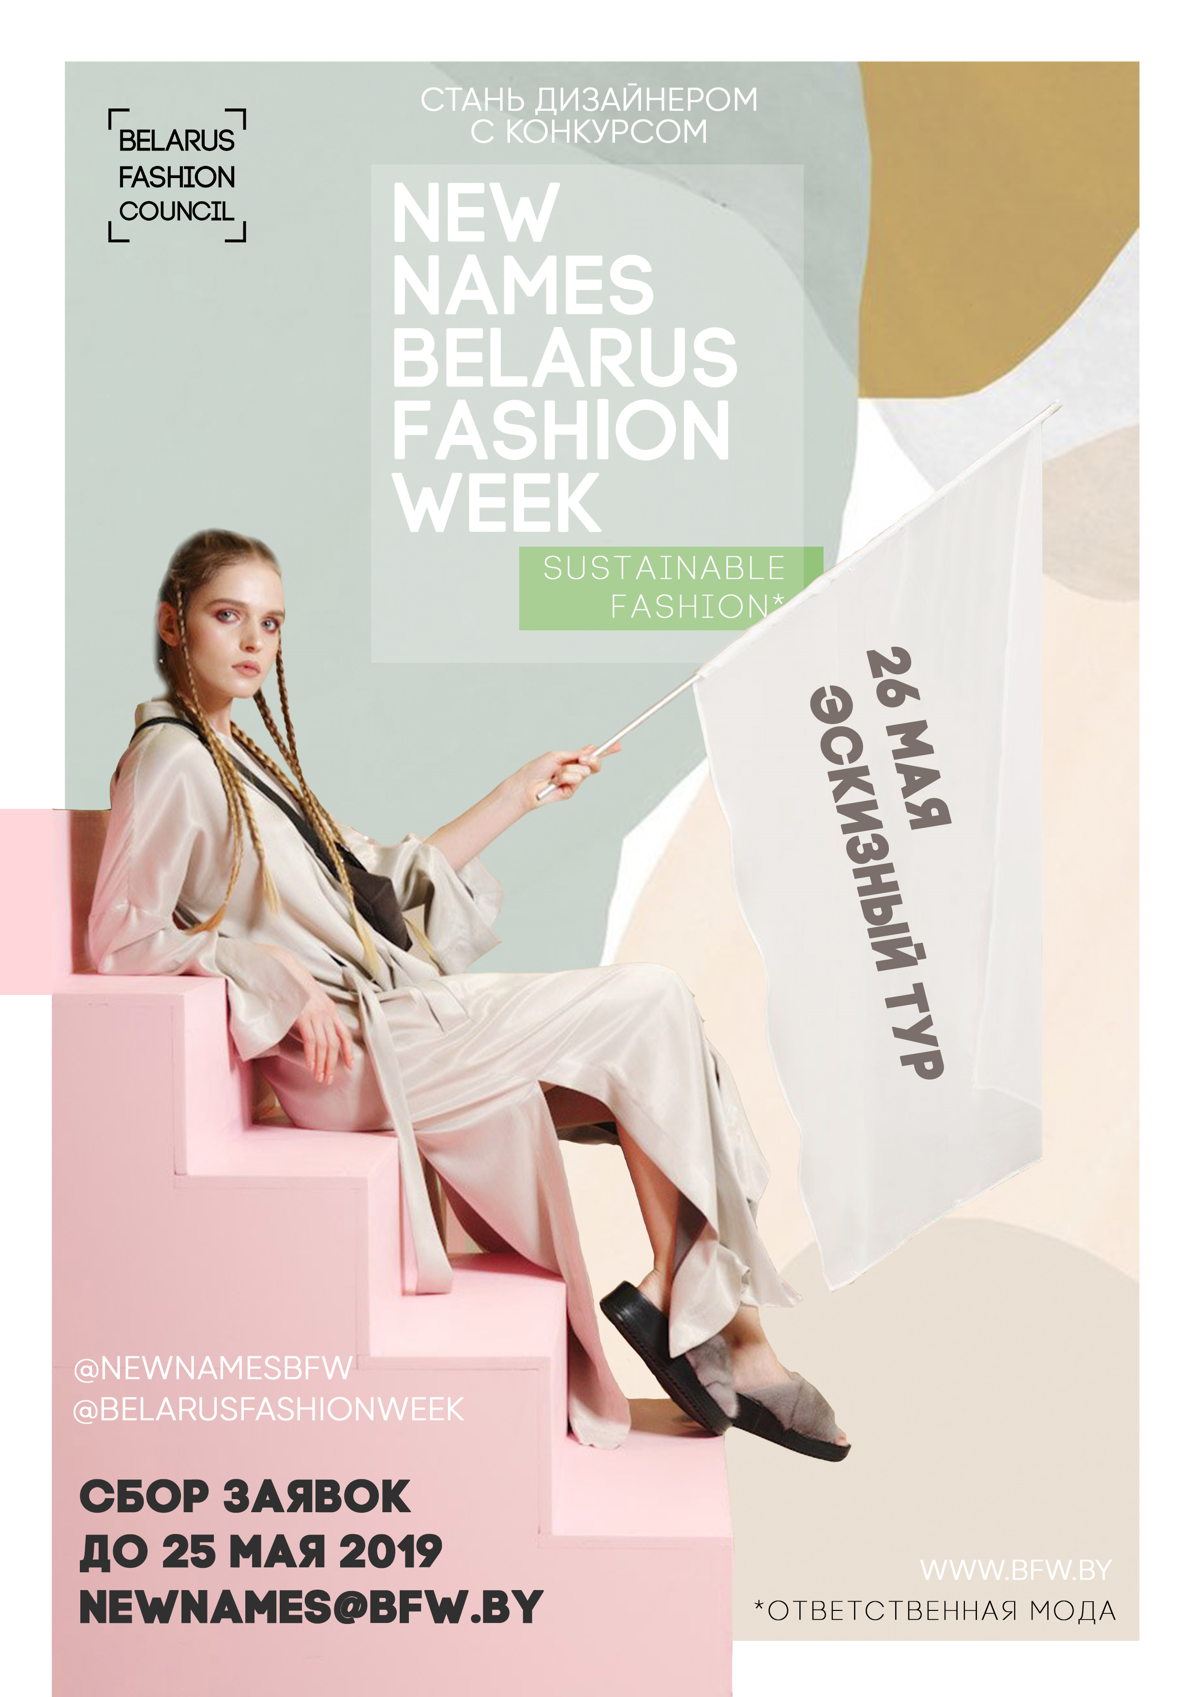 Стань дизайнером вместе с New Names Belarus Fashion Week